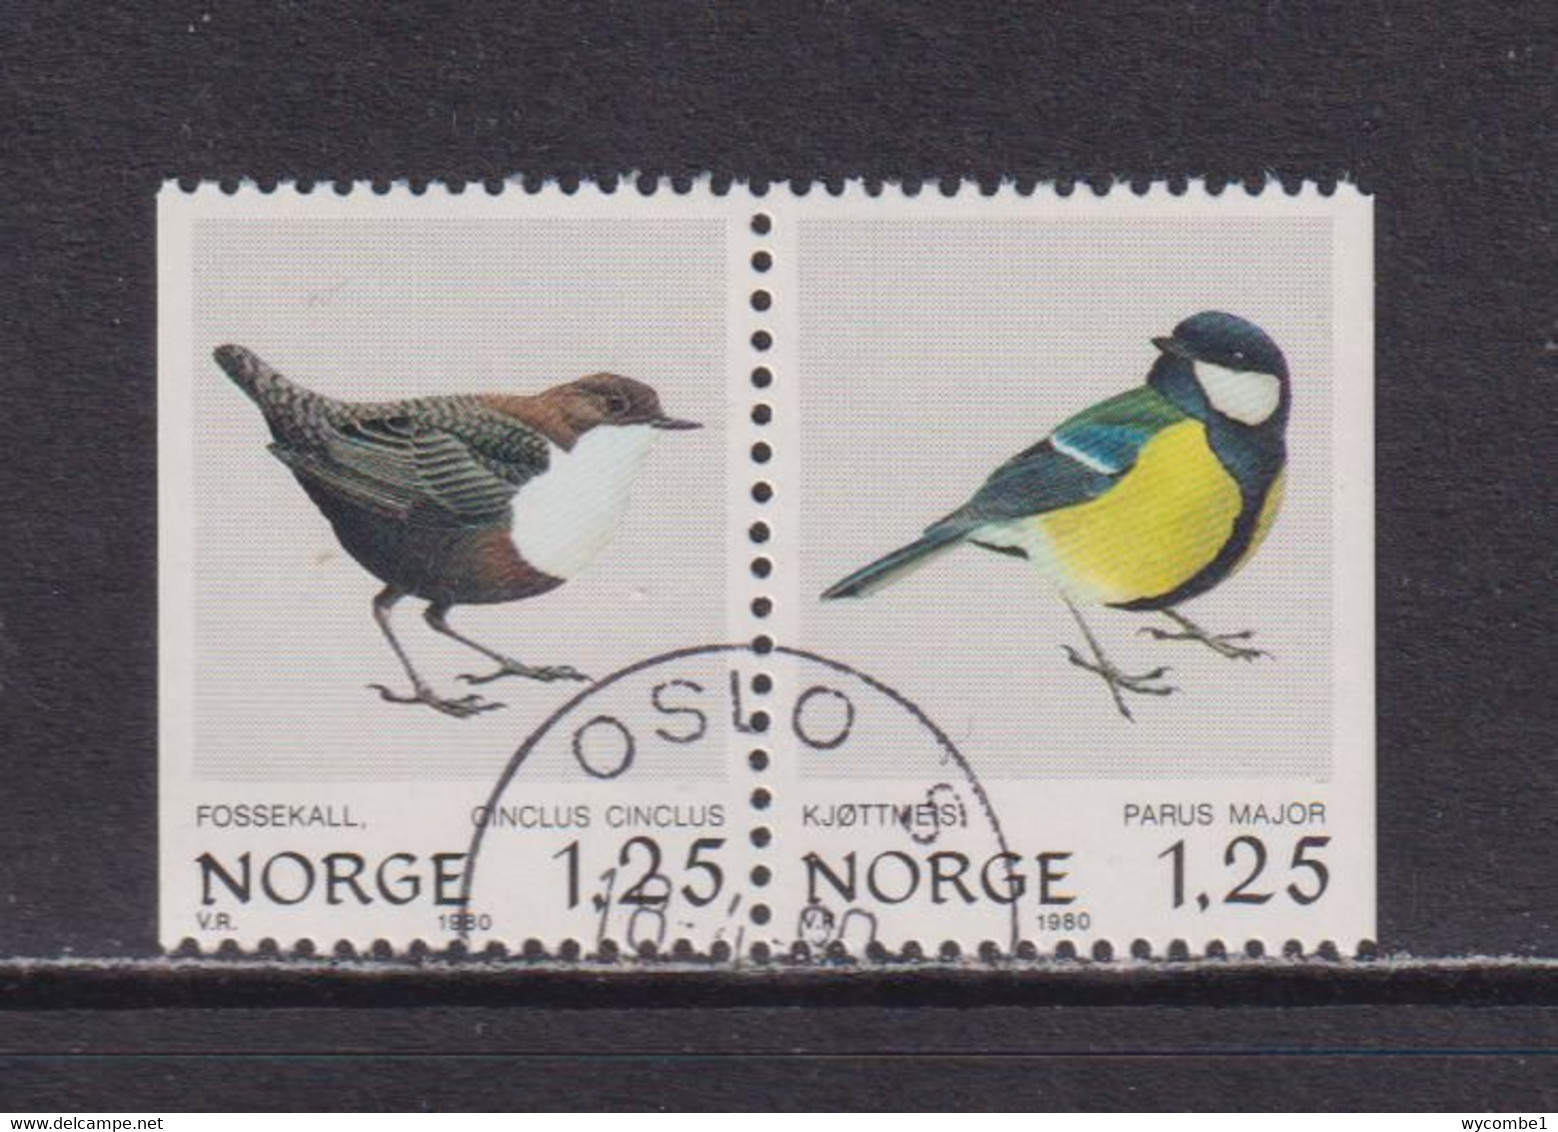 NORWAY - 1980 Birds 1k25  Booklet Pair  Used As Scan - Used Stamps